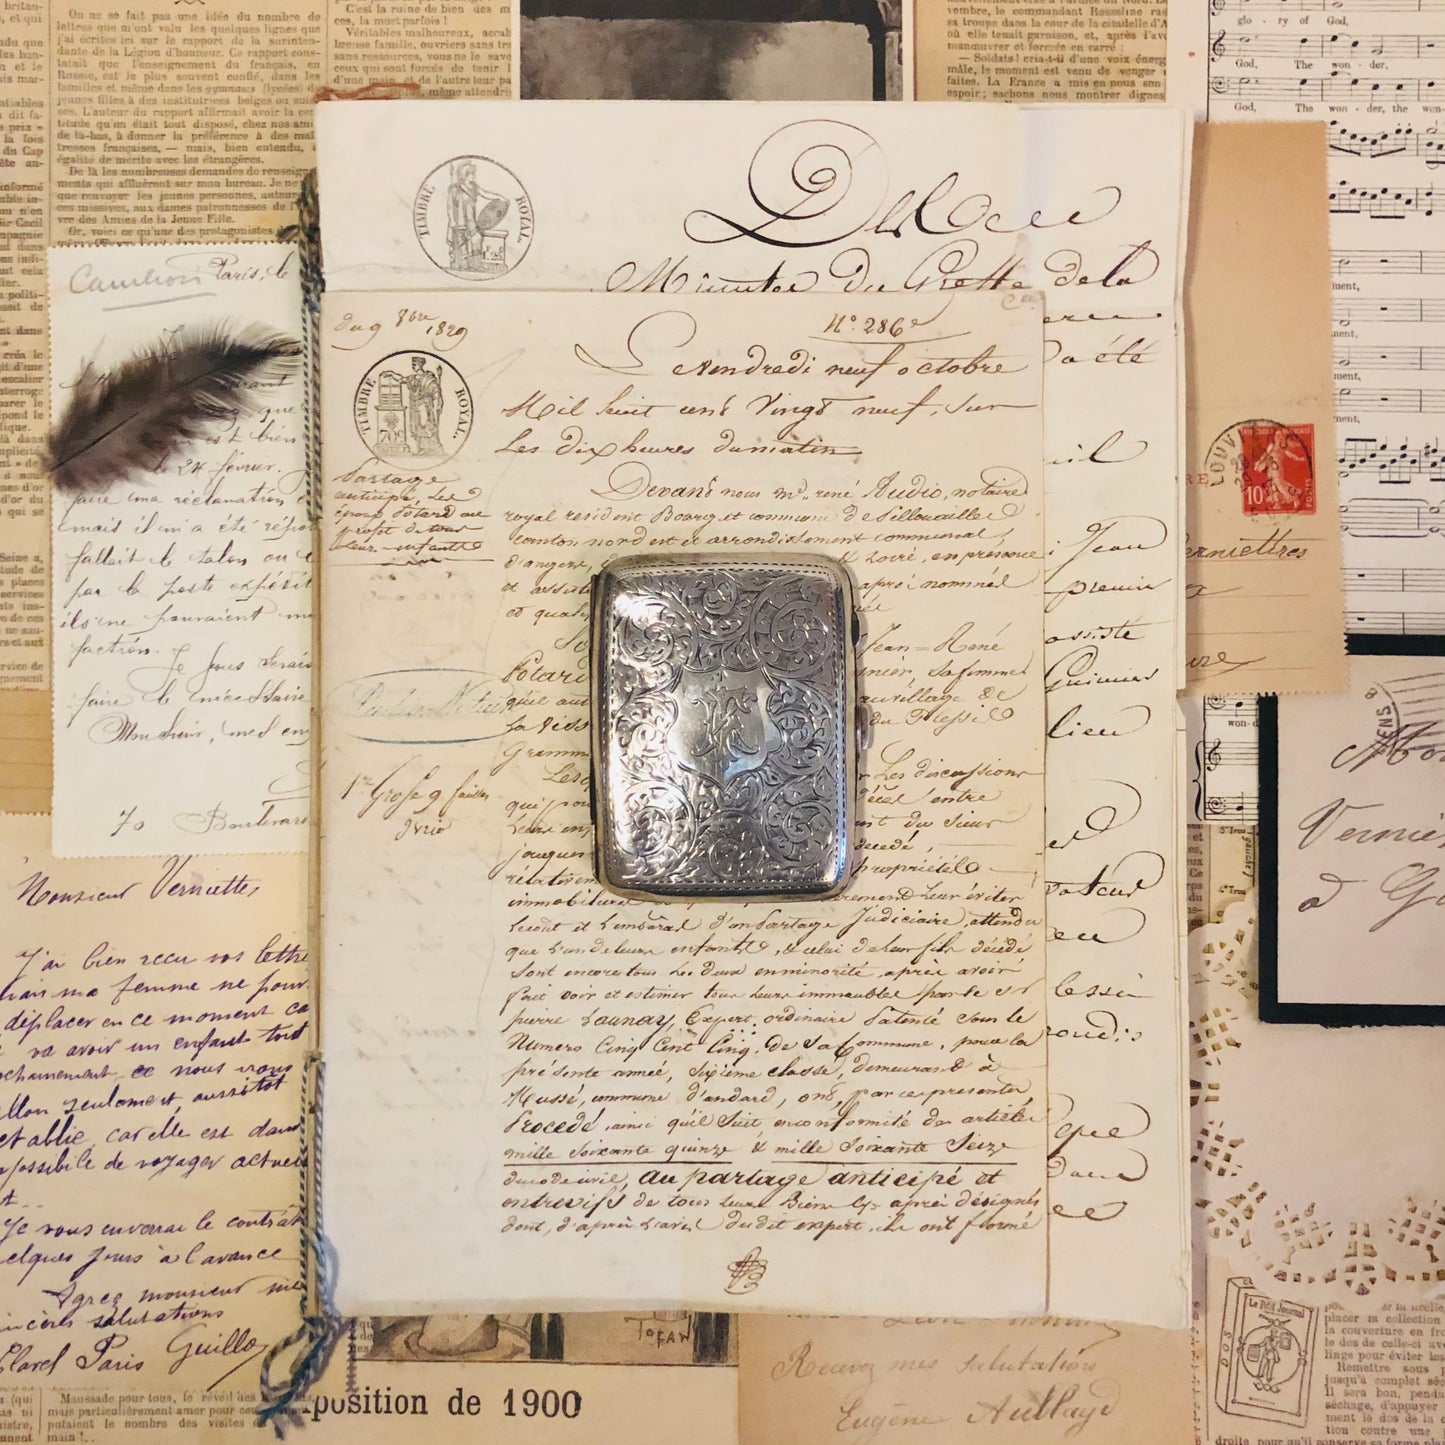 The Mixologist Jude - Antique Silver Cigarette / Card Case